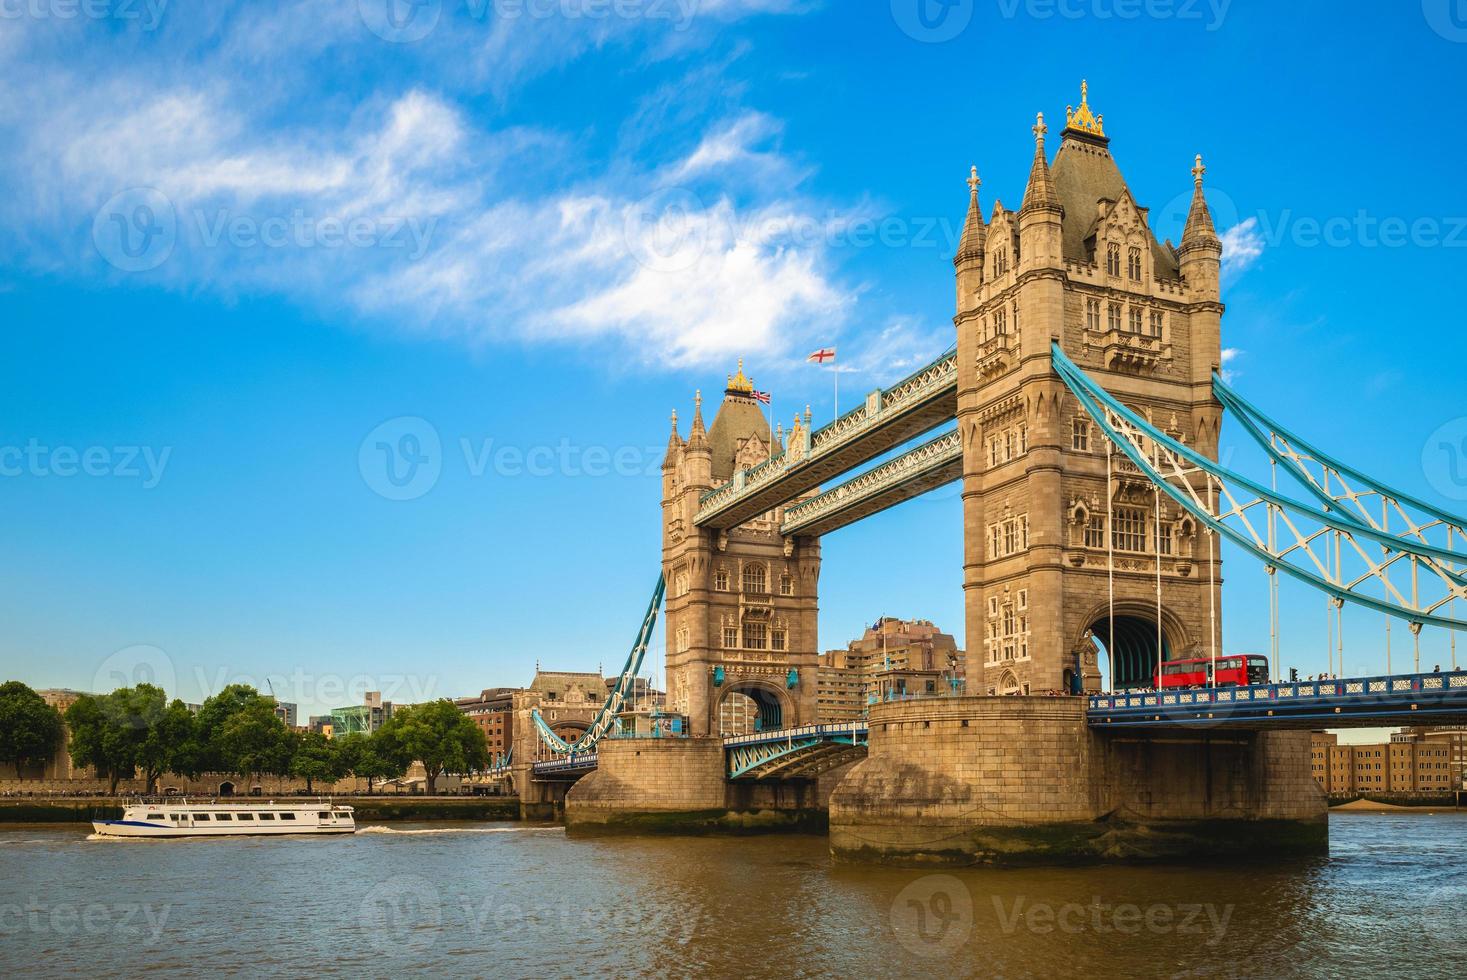 tornbro vid Themsen i London, England, Storbritannien foto